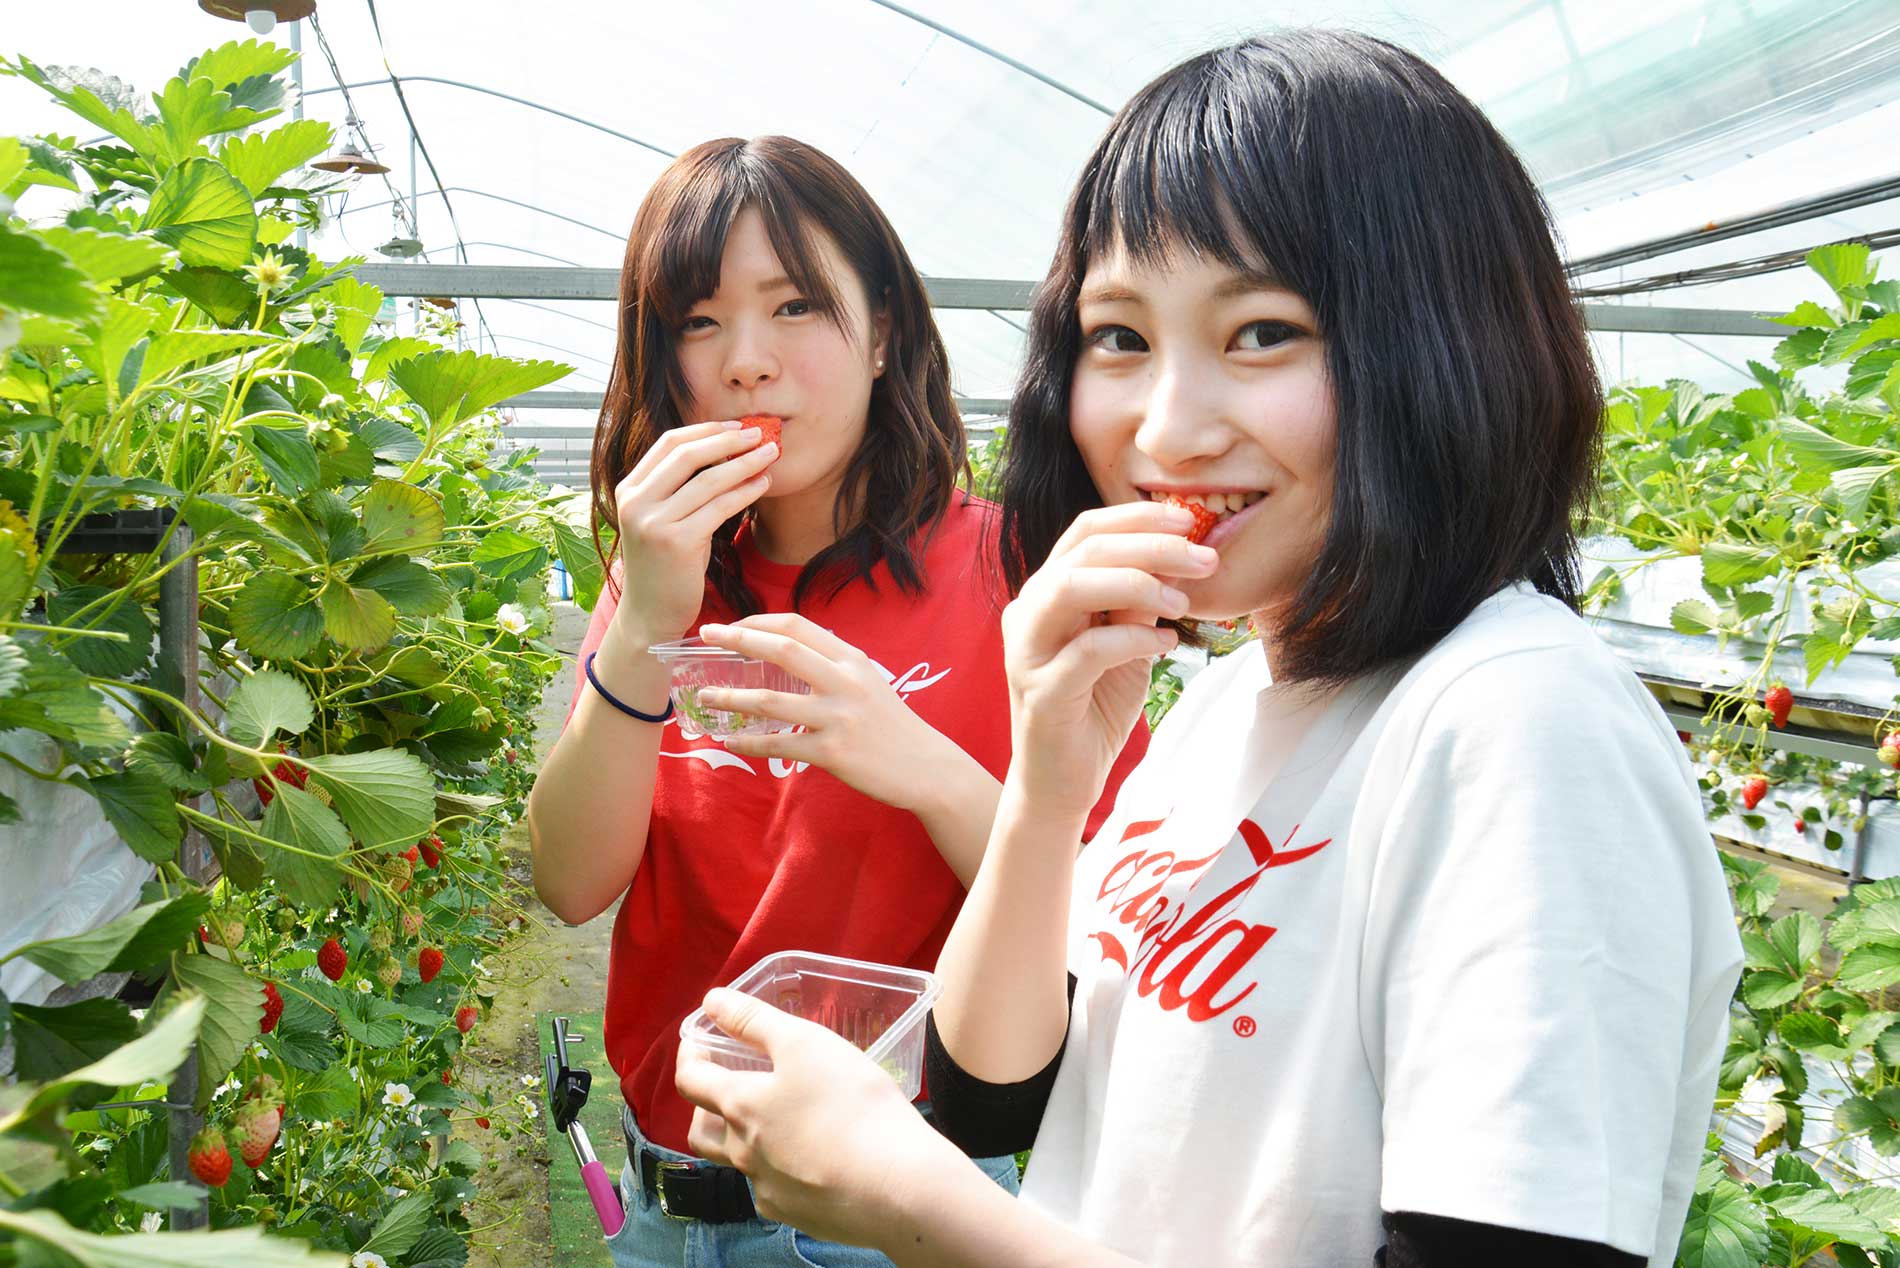 Strawberry picking at Shorenji